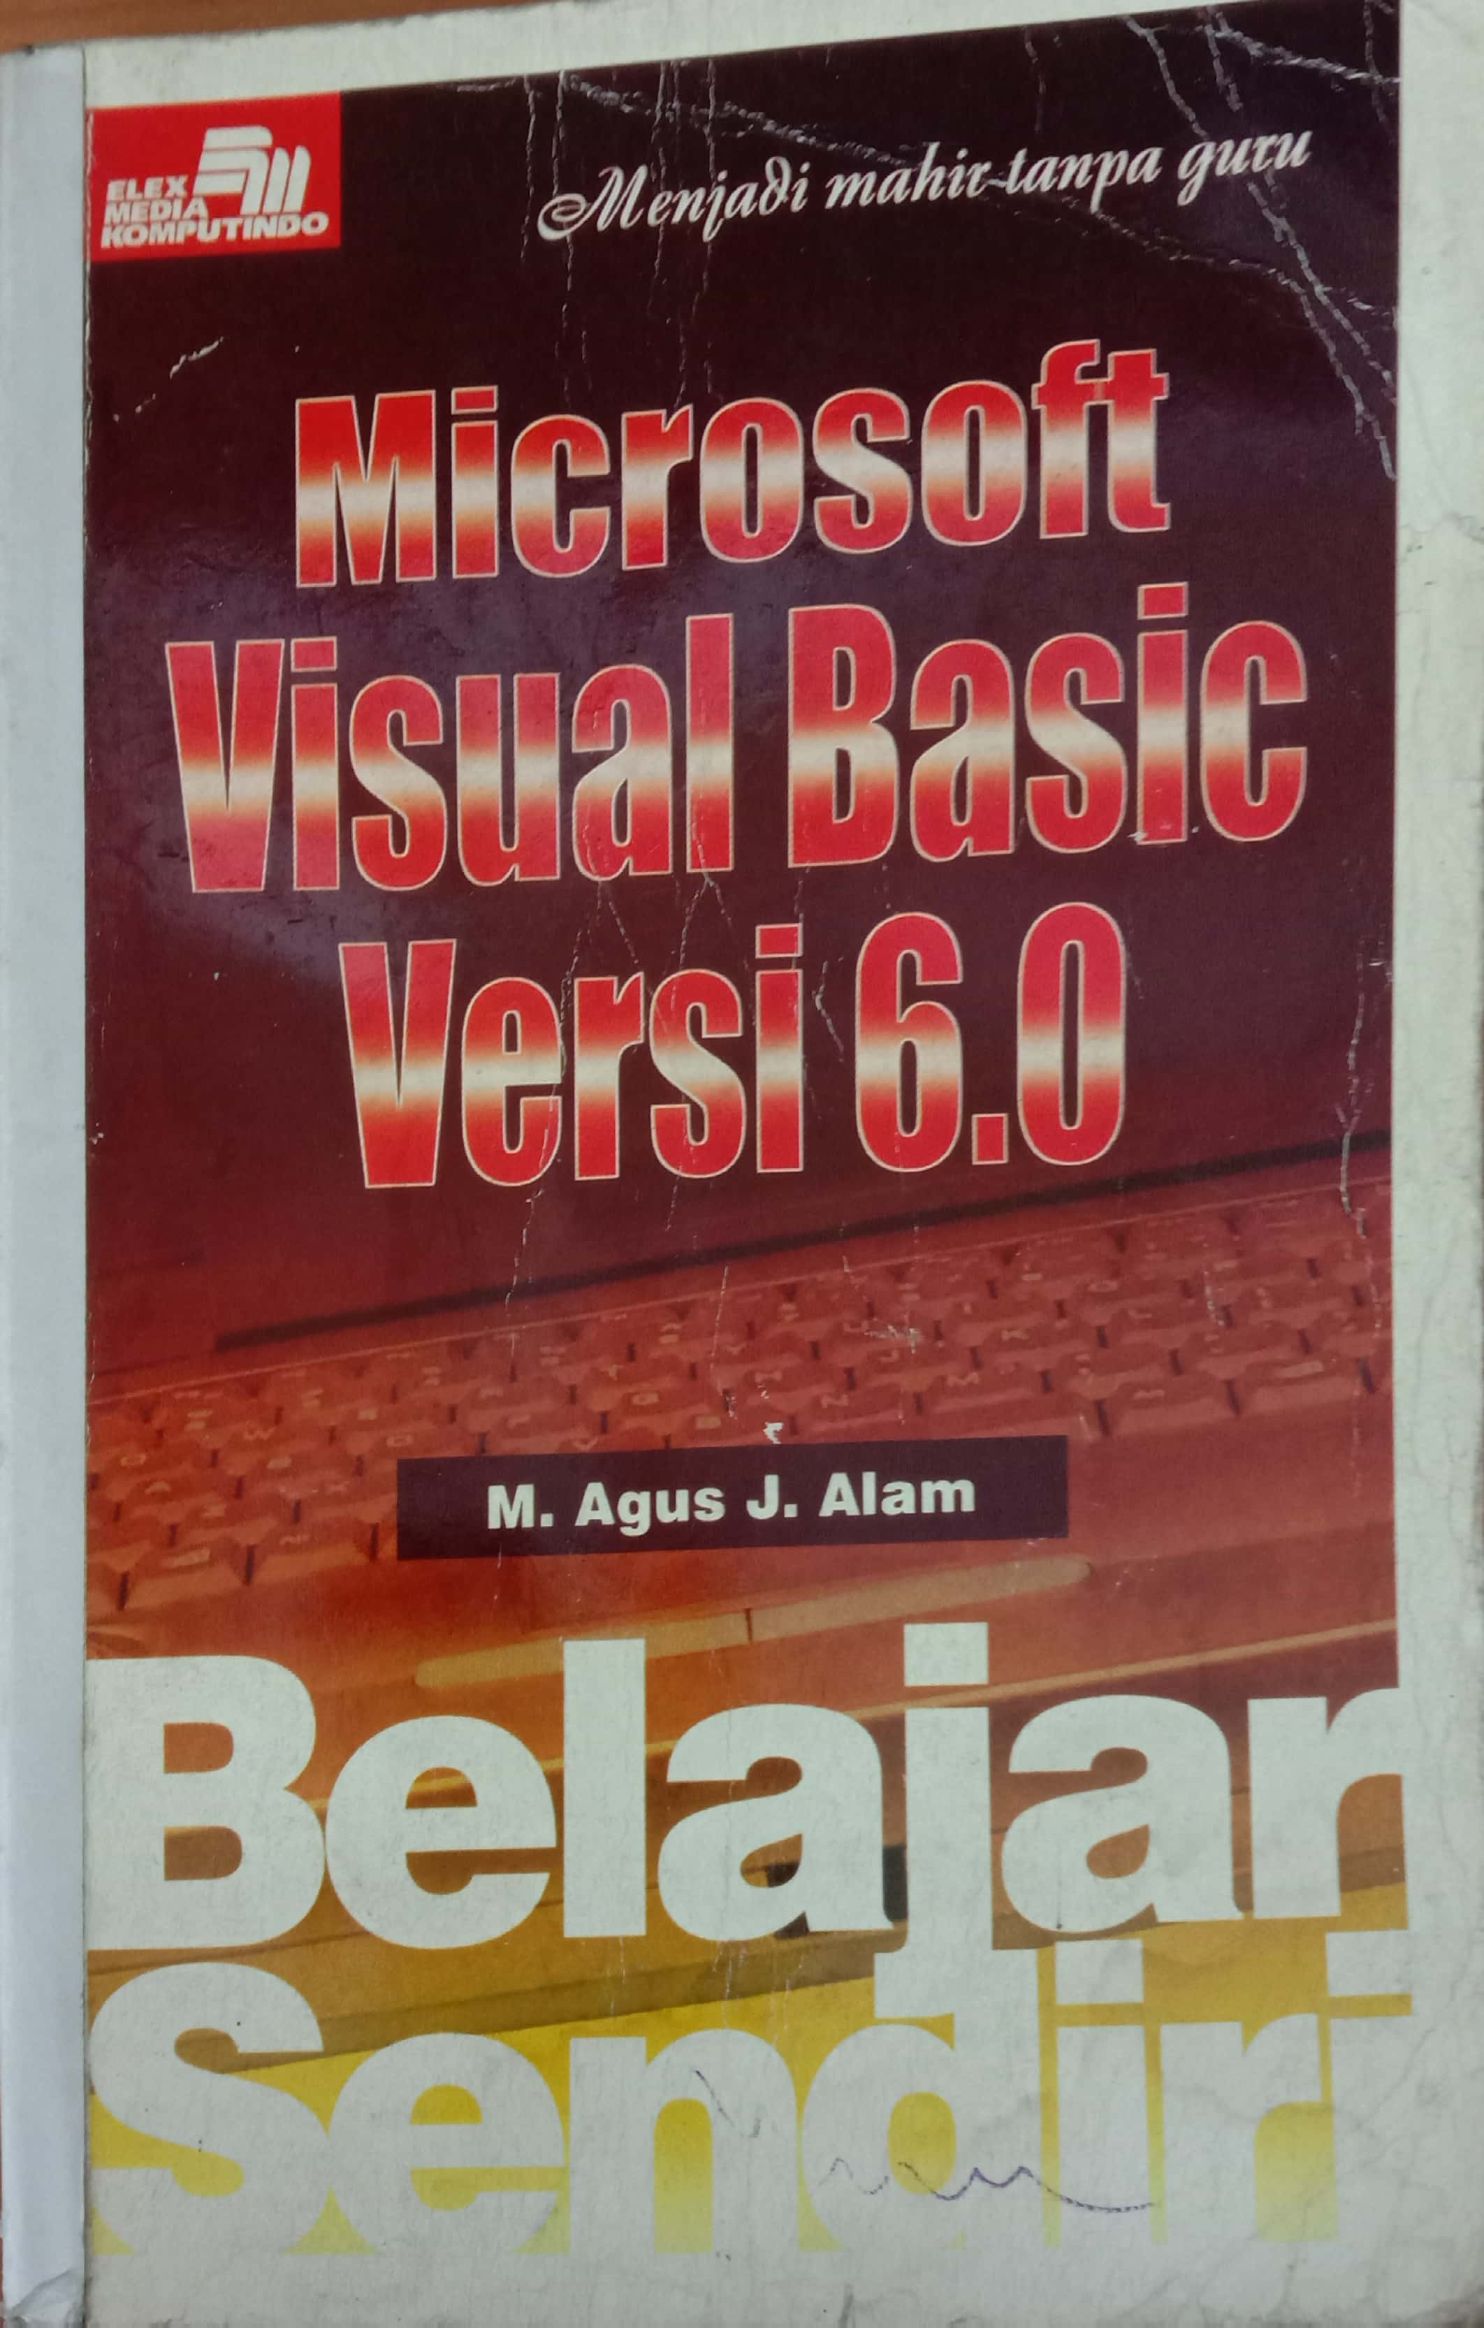 Microsoft Visual Basic Versi 6.0